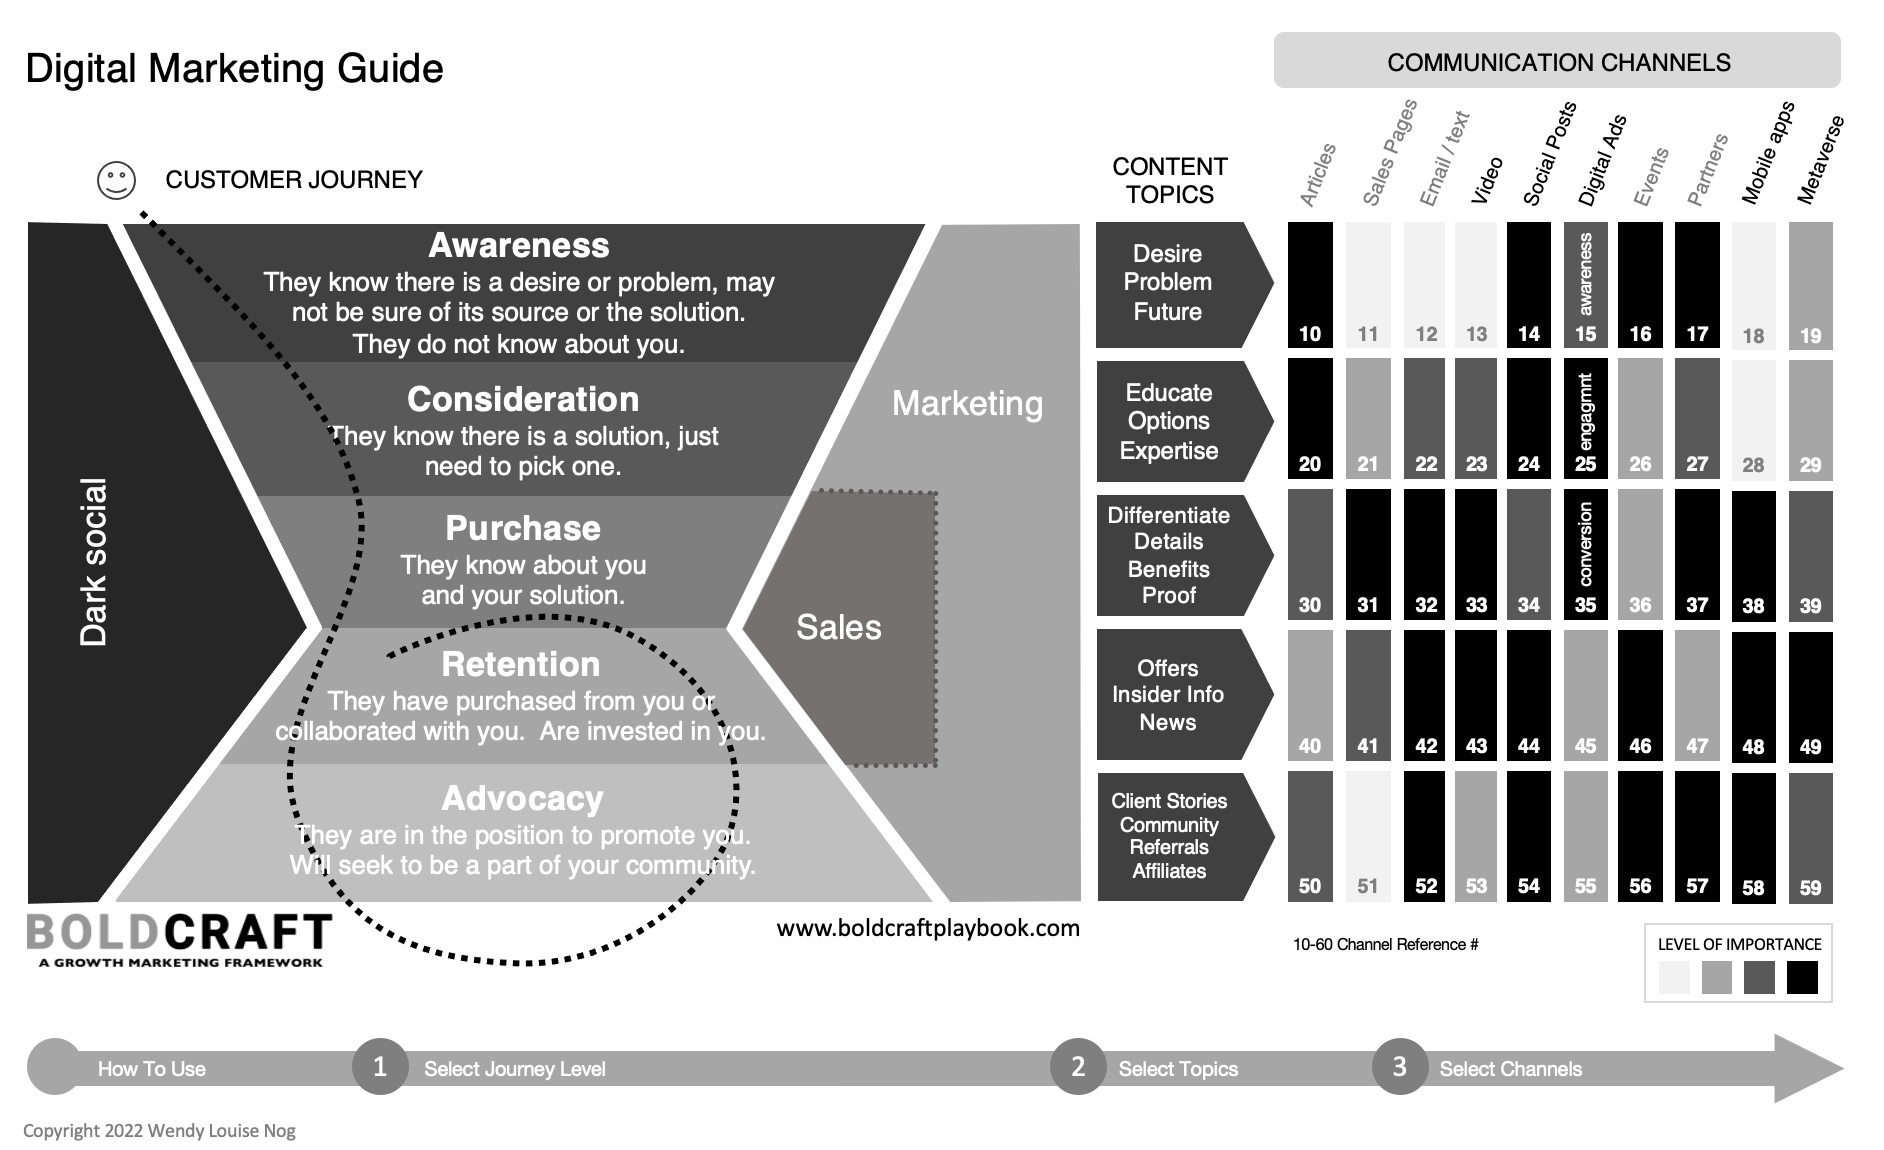 The BOLDCRAFT Digital Marketing Framework